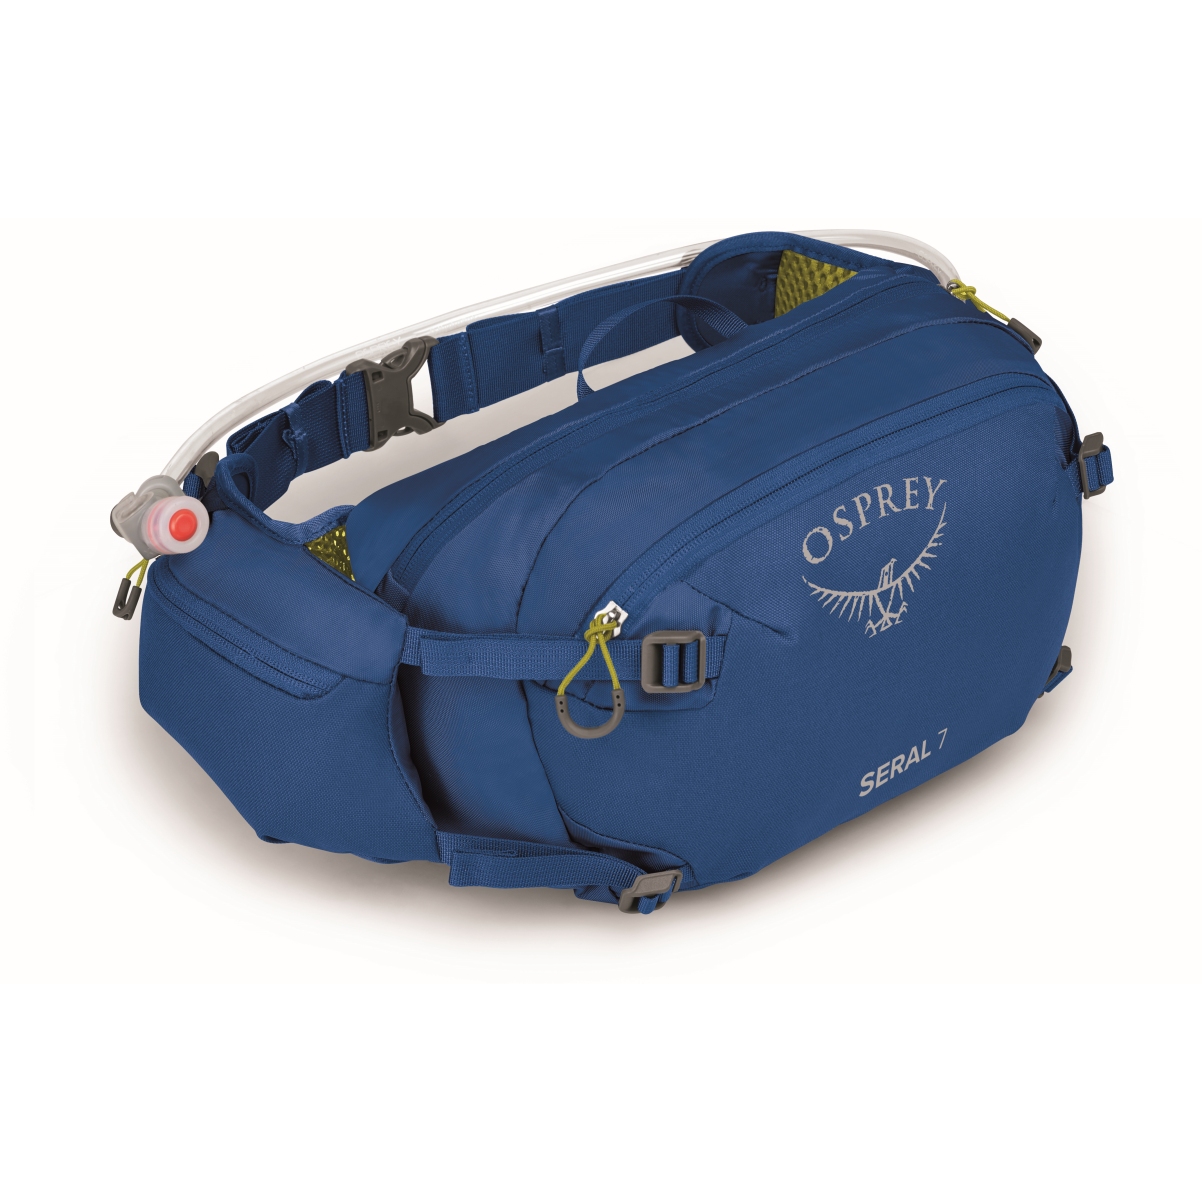 Picture of Osprey Seral 7 Waist Pack + Hydration Bladder - Postal Blue